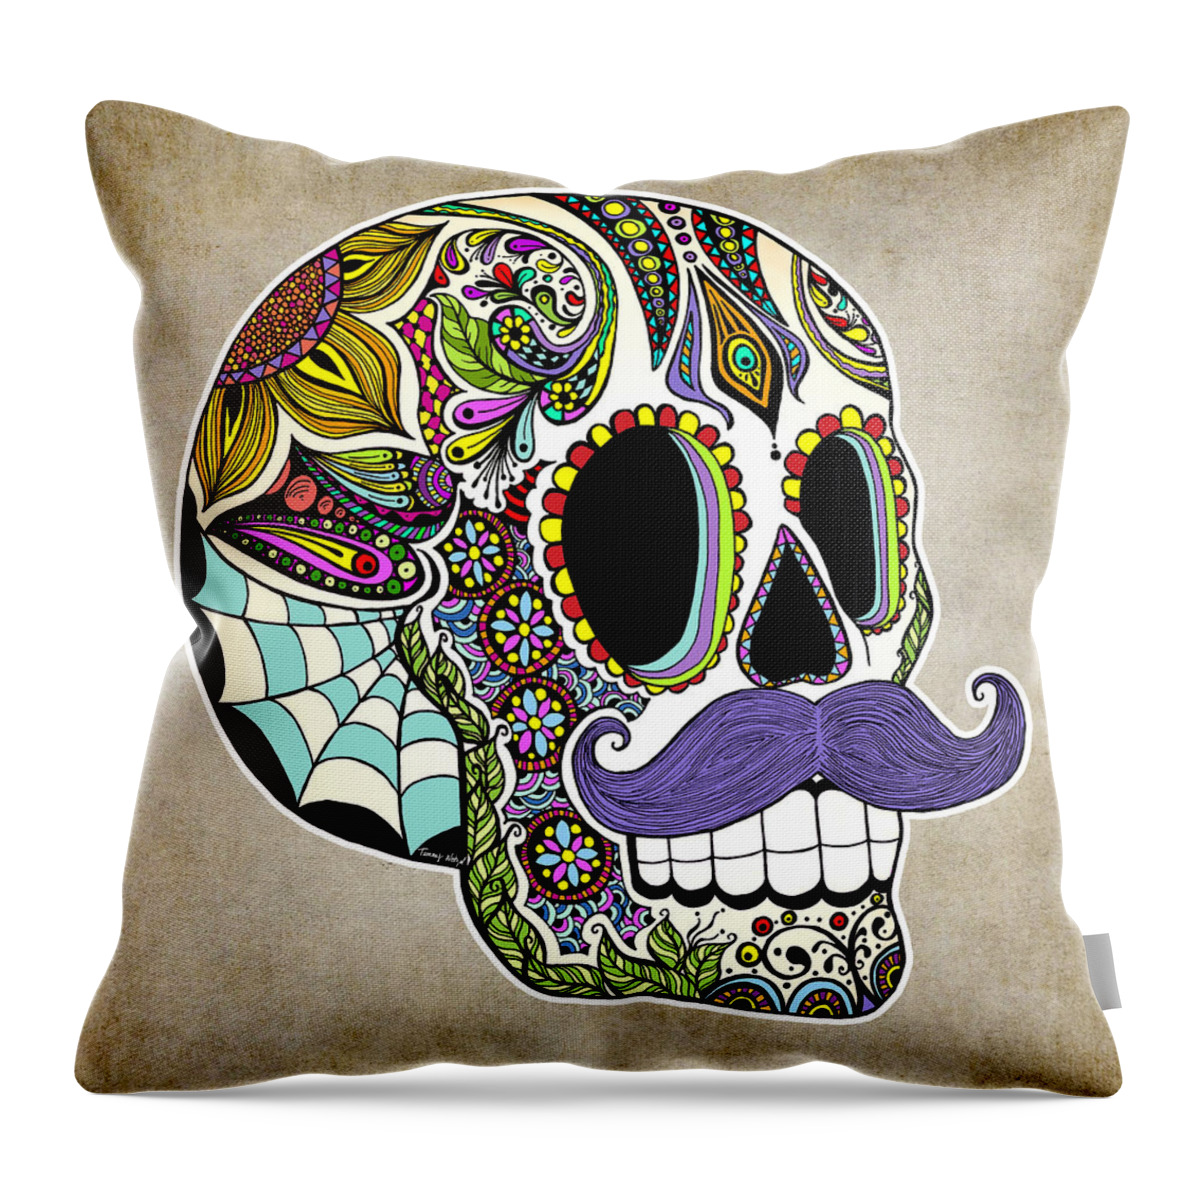 Vintage Throw Pillow featuring the digital art Mustache Sugar Skull Vintage Style by Tammy Wetzel